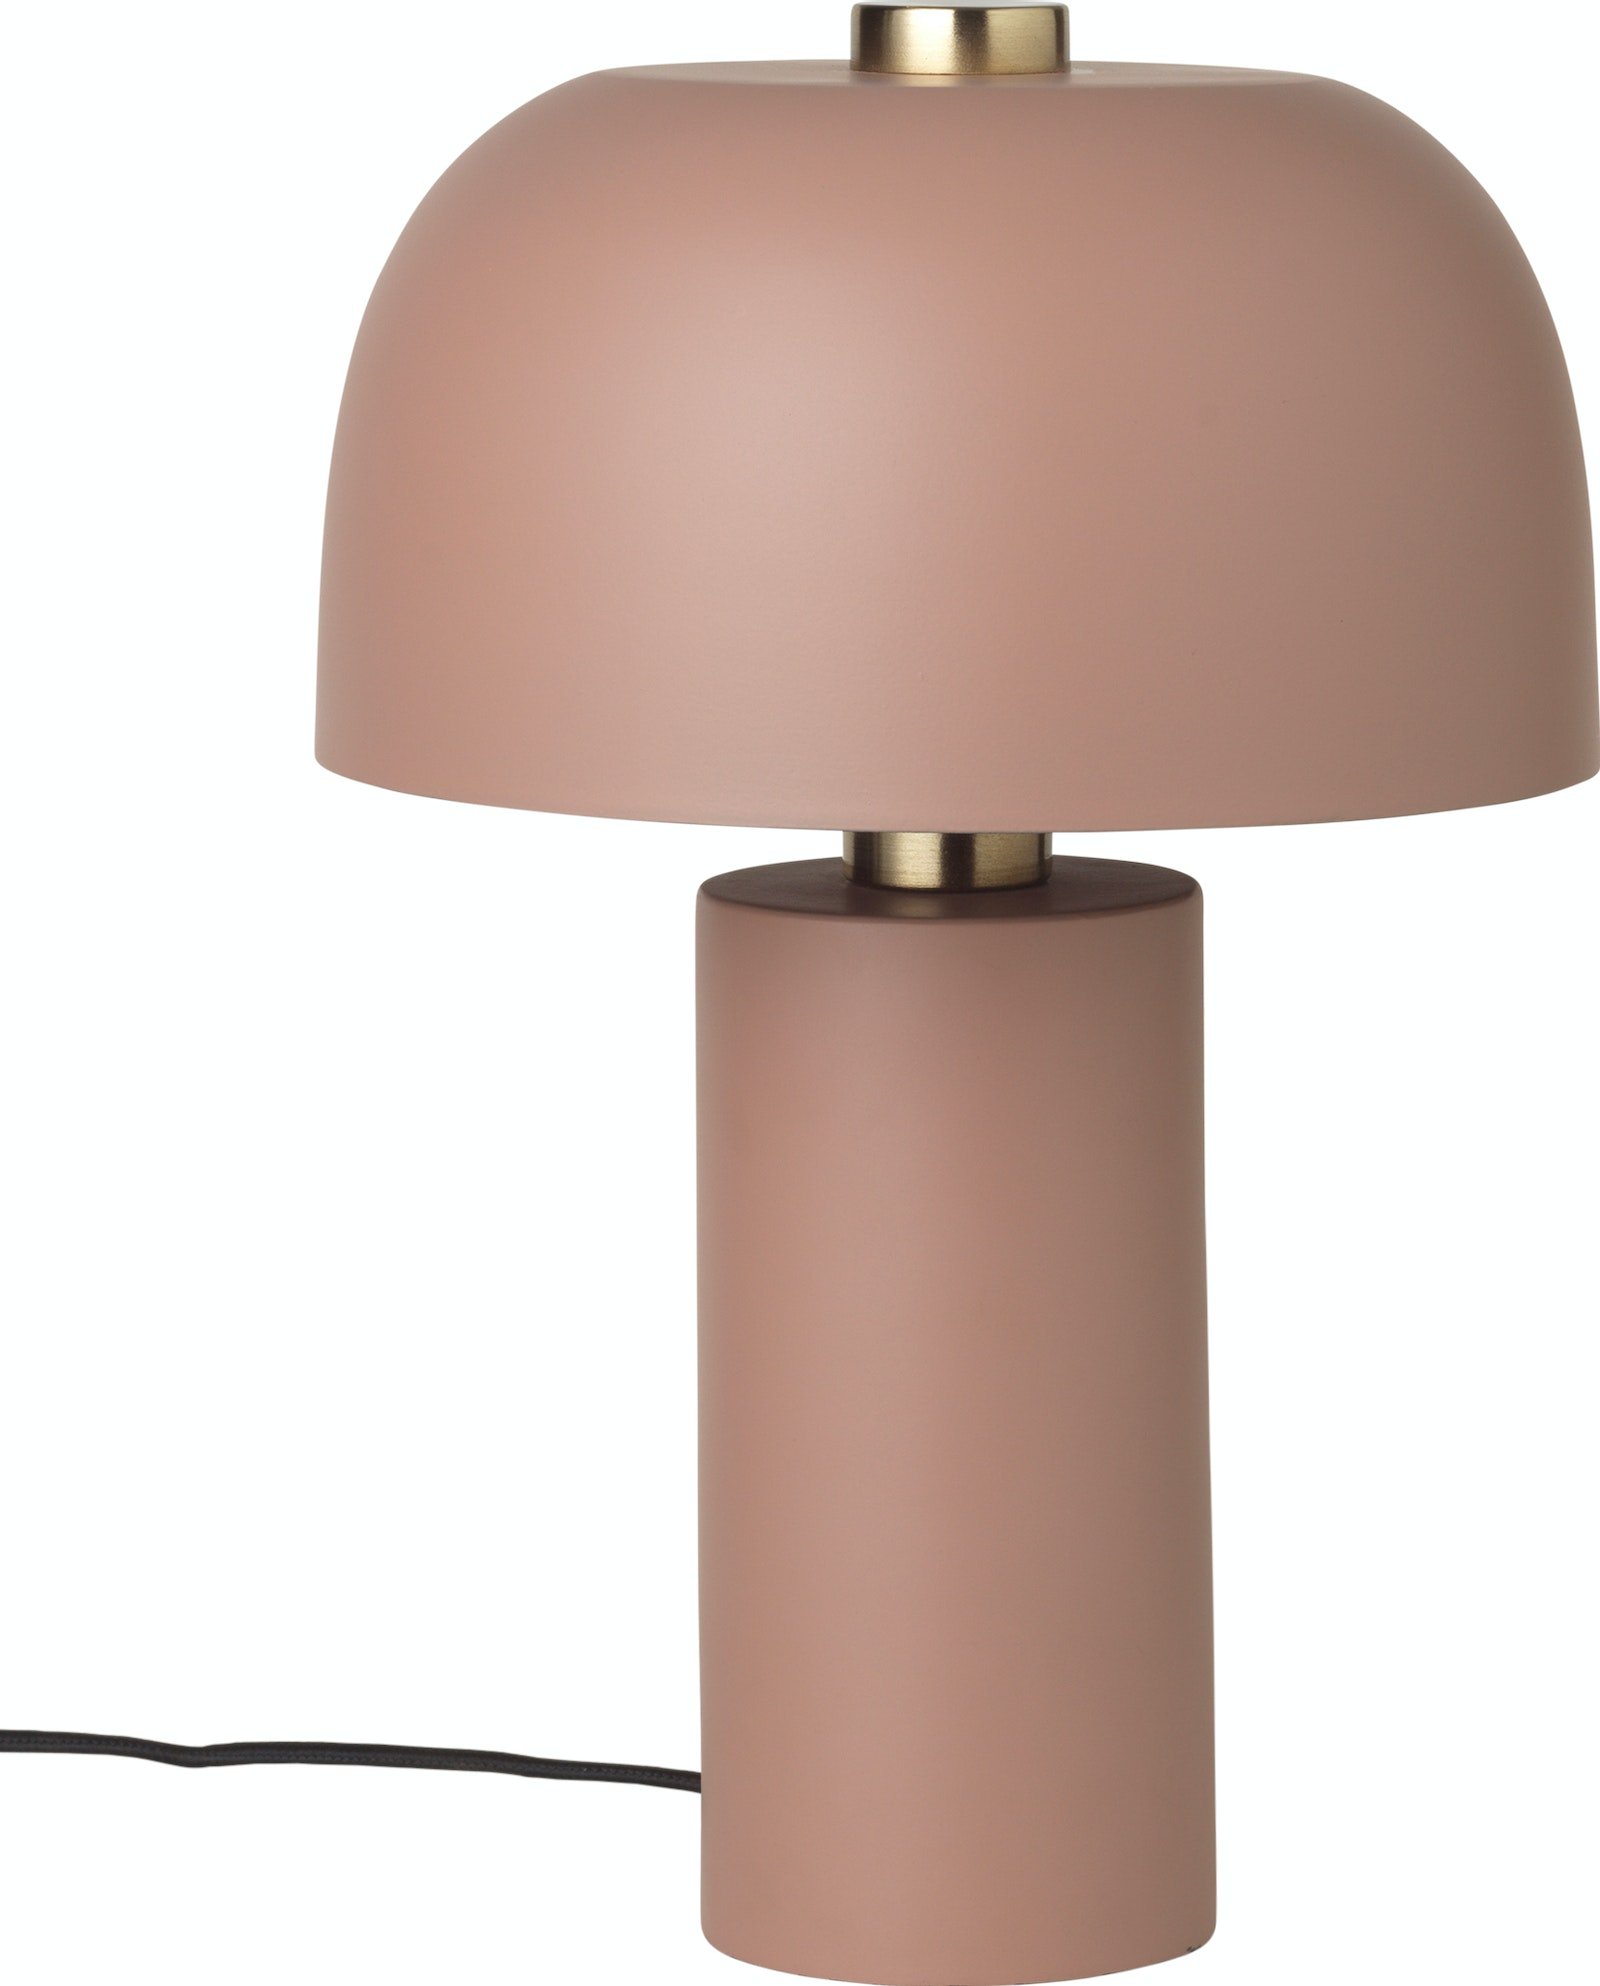 På billedet ser du variationen Lulu, Bordlampe, Jern fra brandet Cozy Living i en størrelse D: 26 cm. x H: 37 cm. i farven Rosa